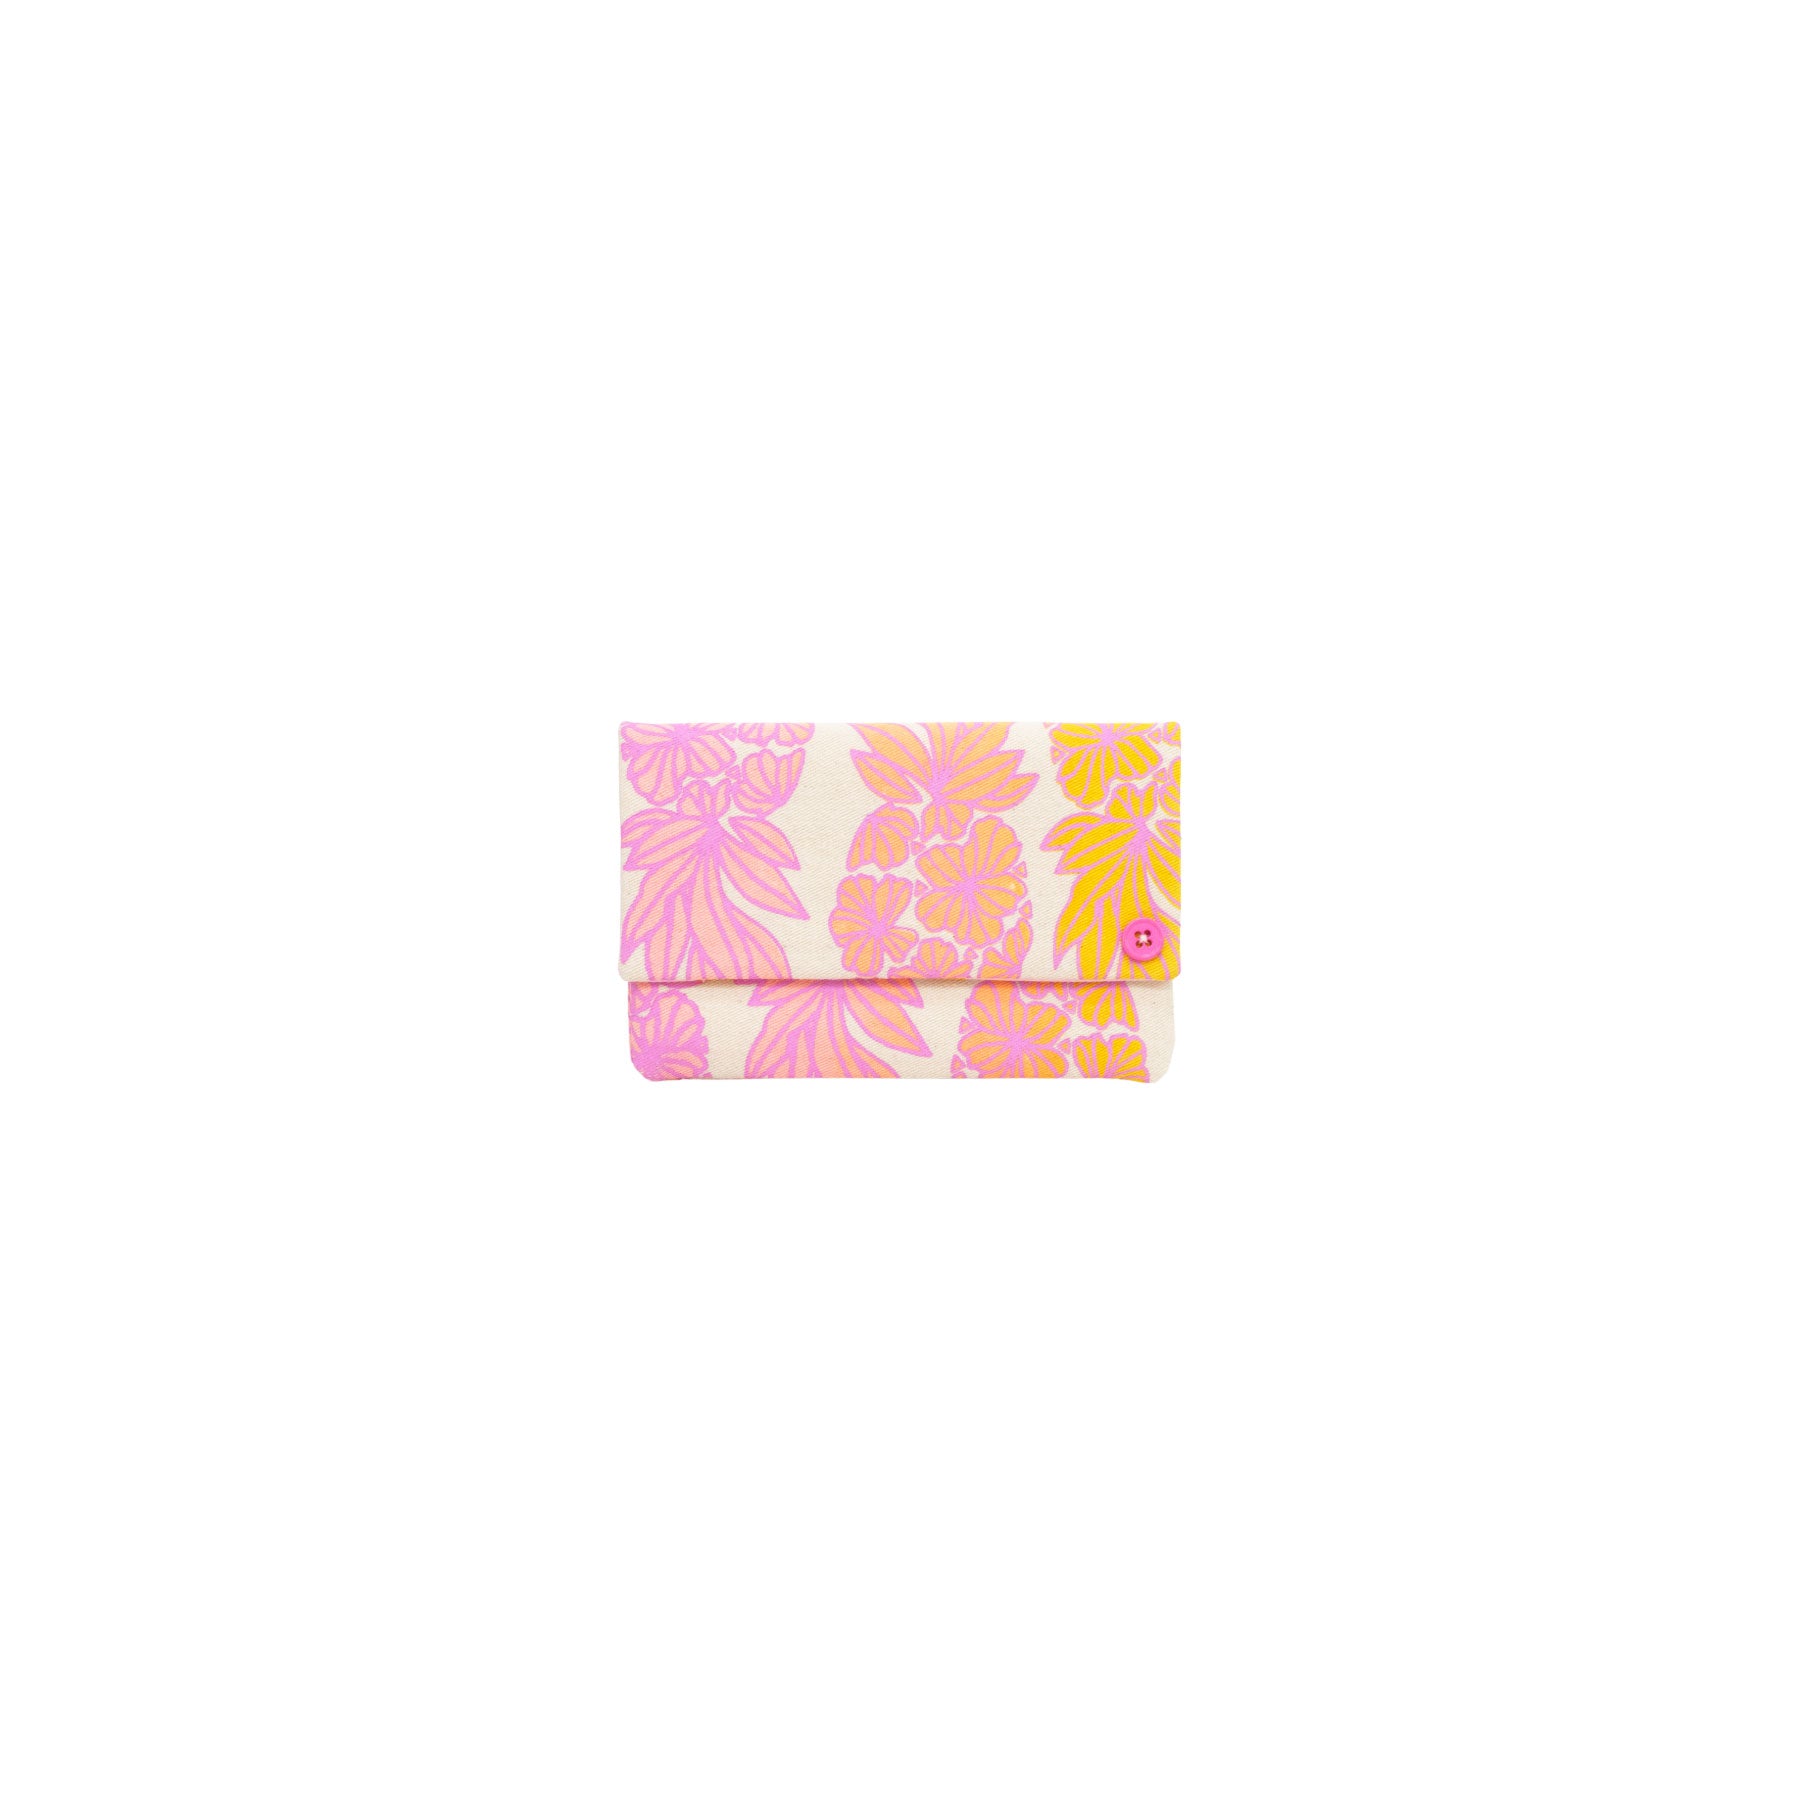 Petite Envelope Clutch • Seaflower Pineapple • Pink over Sherbet Rainbow